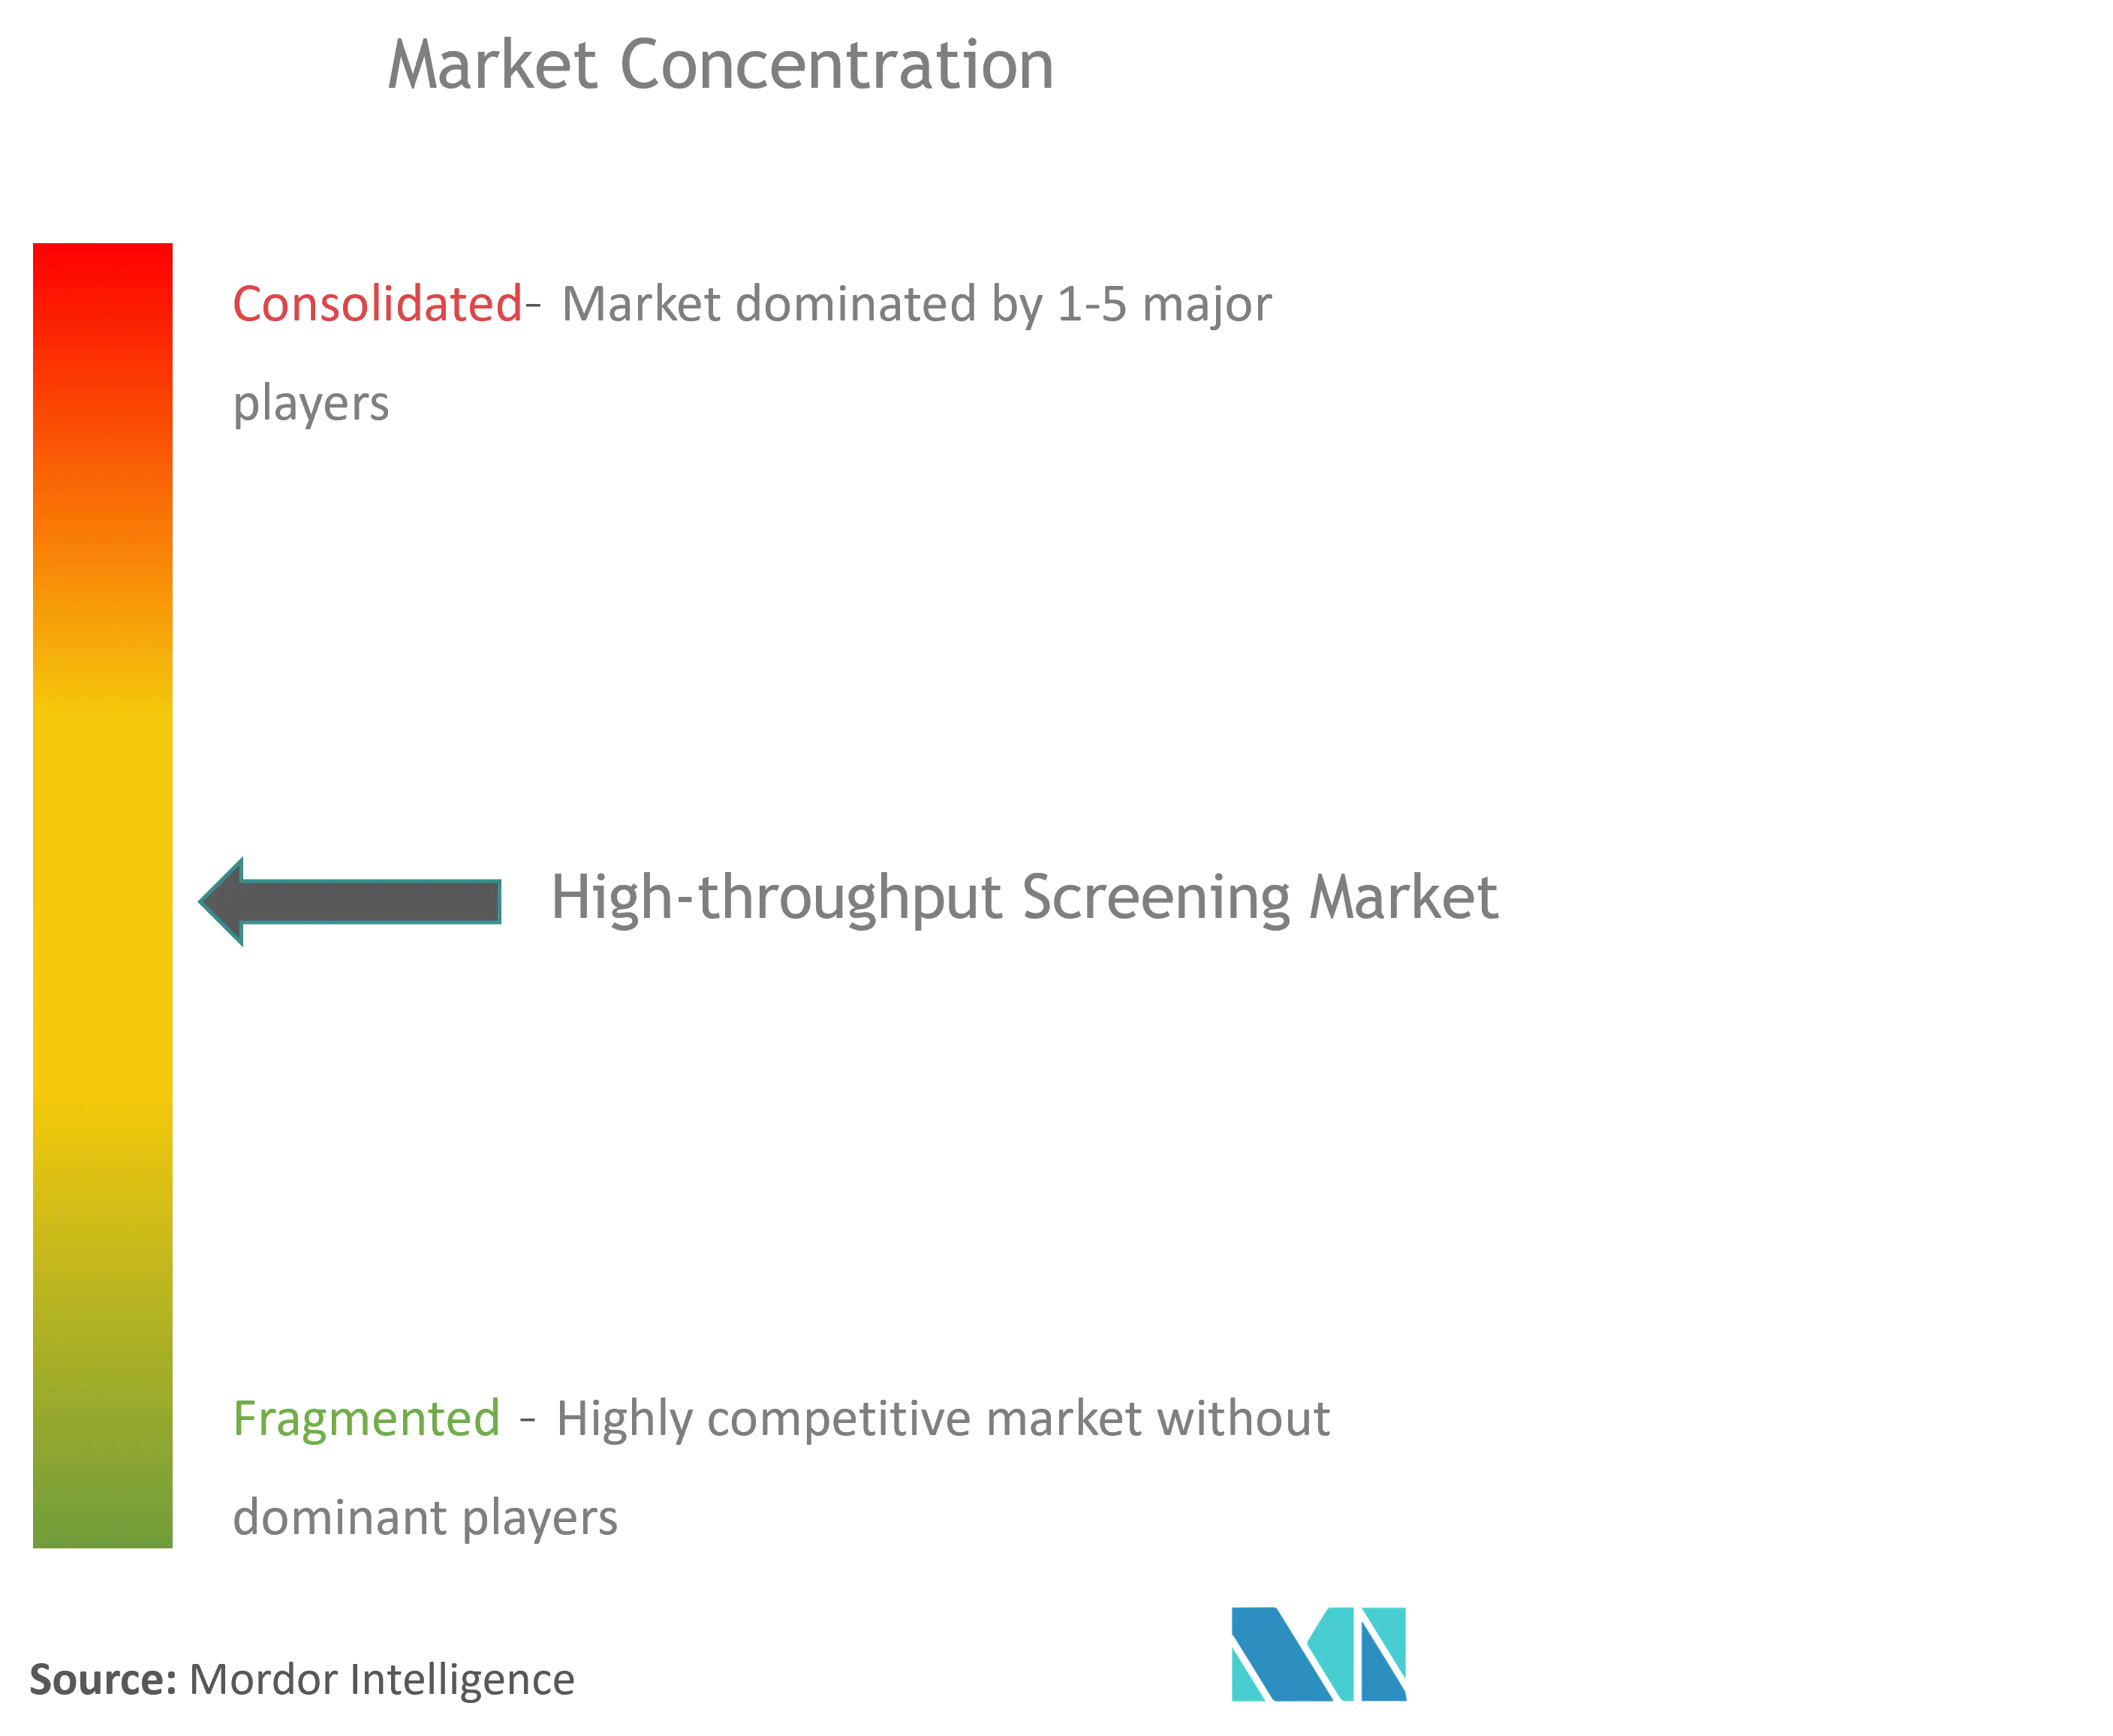 High-throughput Screening Market Concentration